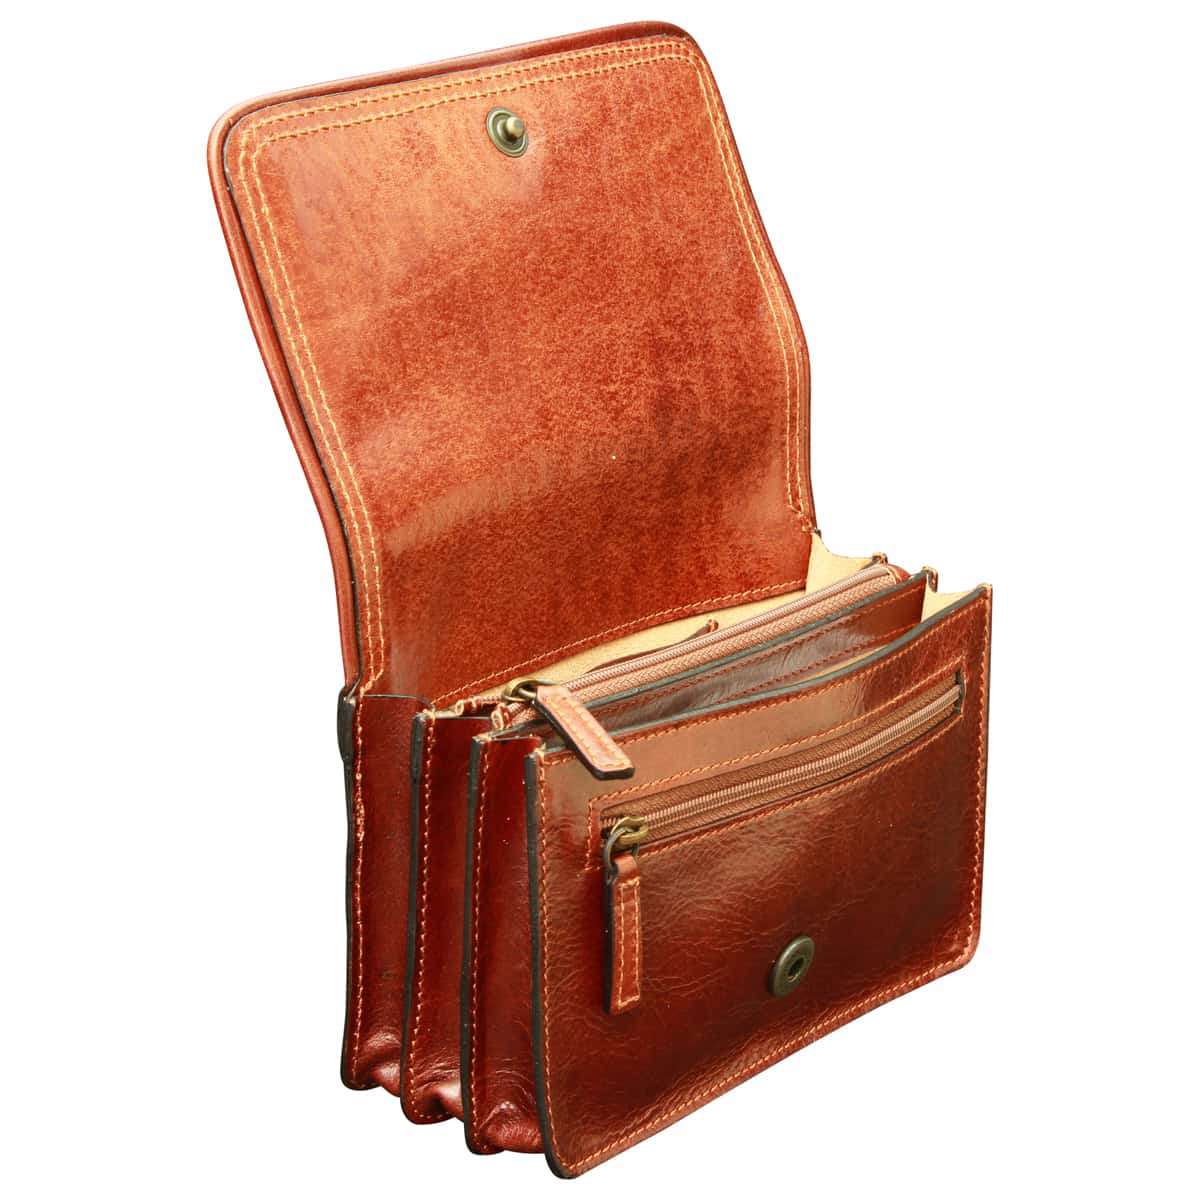 Leather pochette - Brown | 407905MA UK | Old Angler Firenze